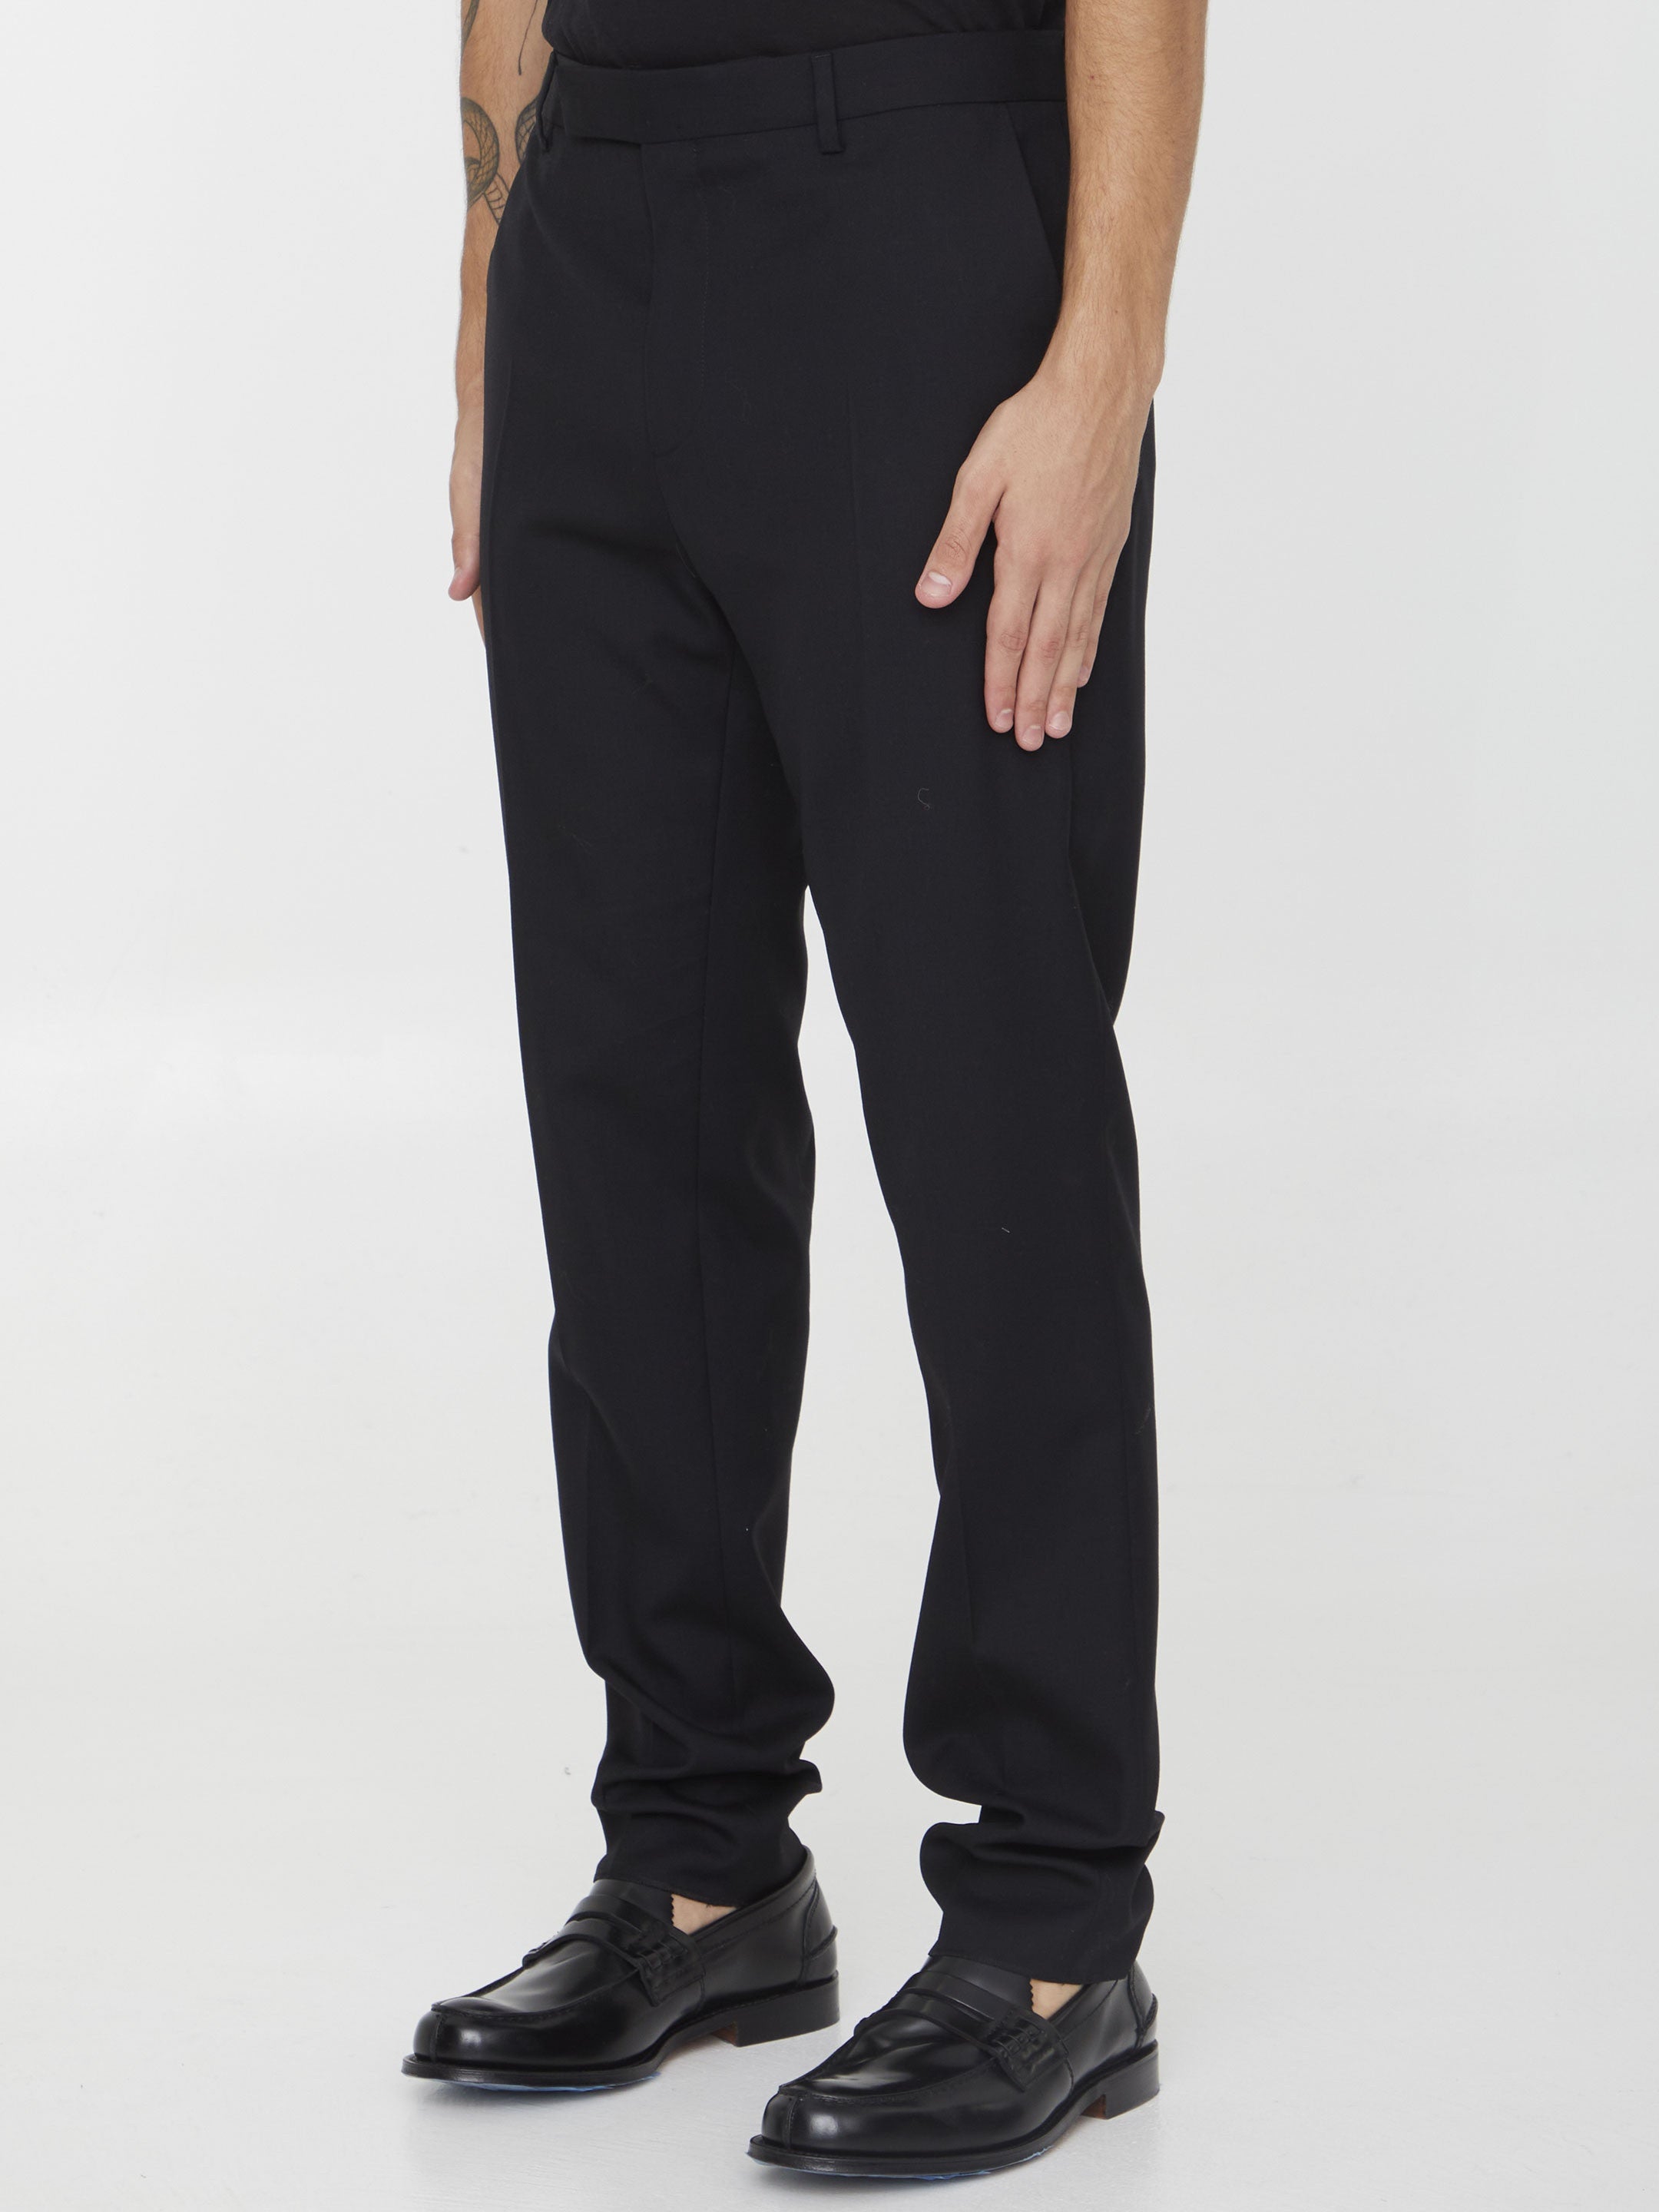 CELINE-OUTLET-SALE-Wool-gabardine-trousers-Hosen-50-BLACK-ARCHIVE-COLLECTION-2.jpg